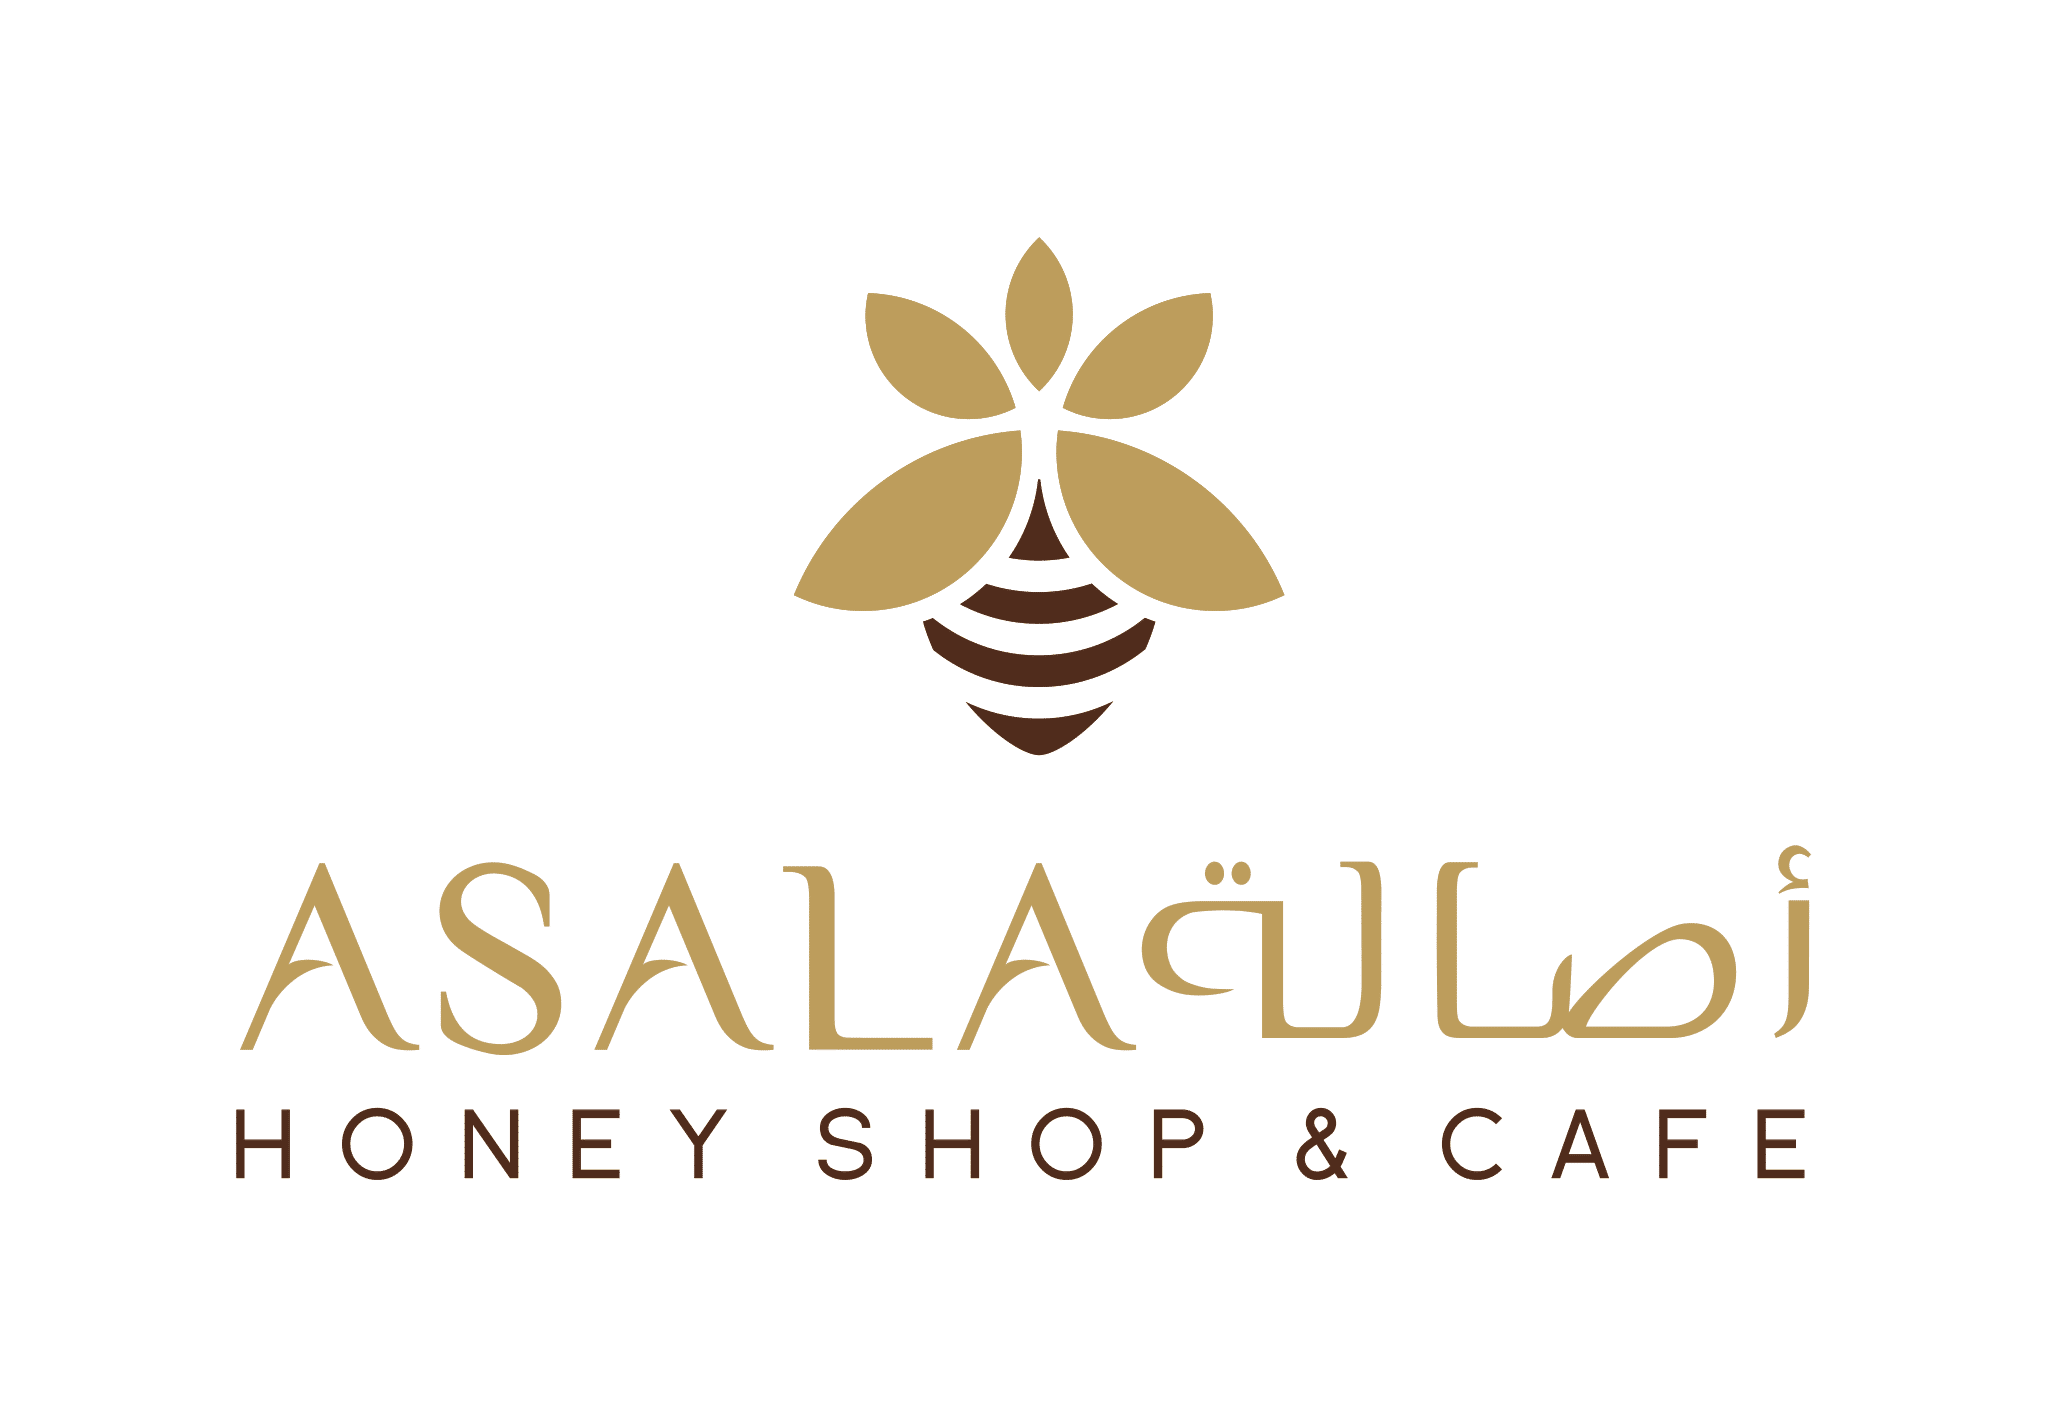 Asala Honey Shop & Cafe